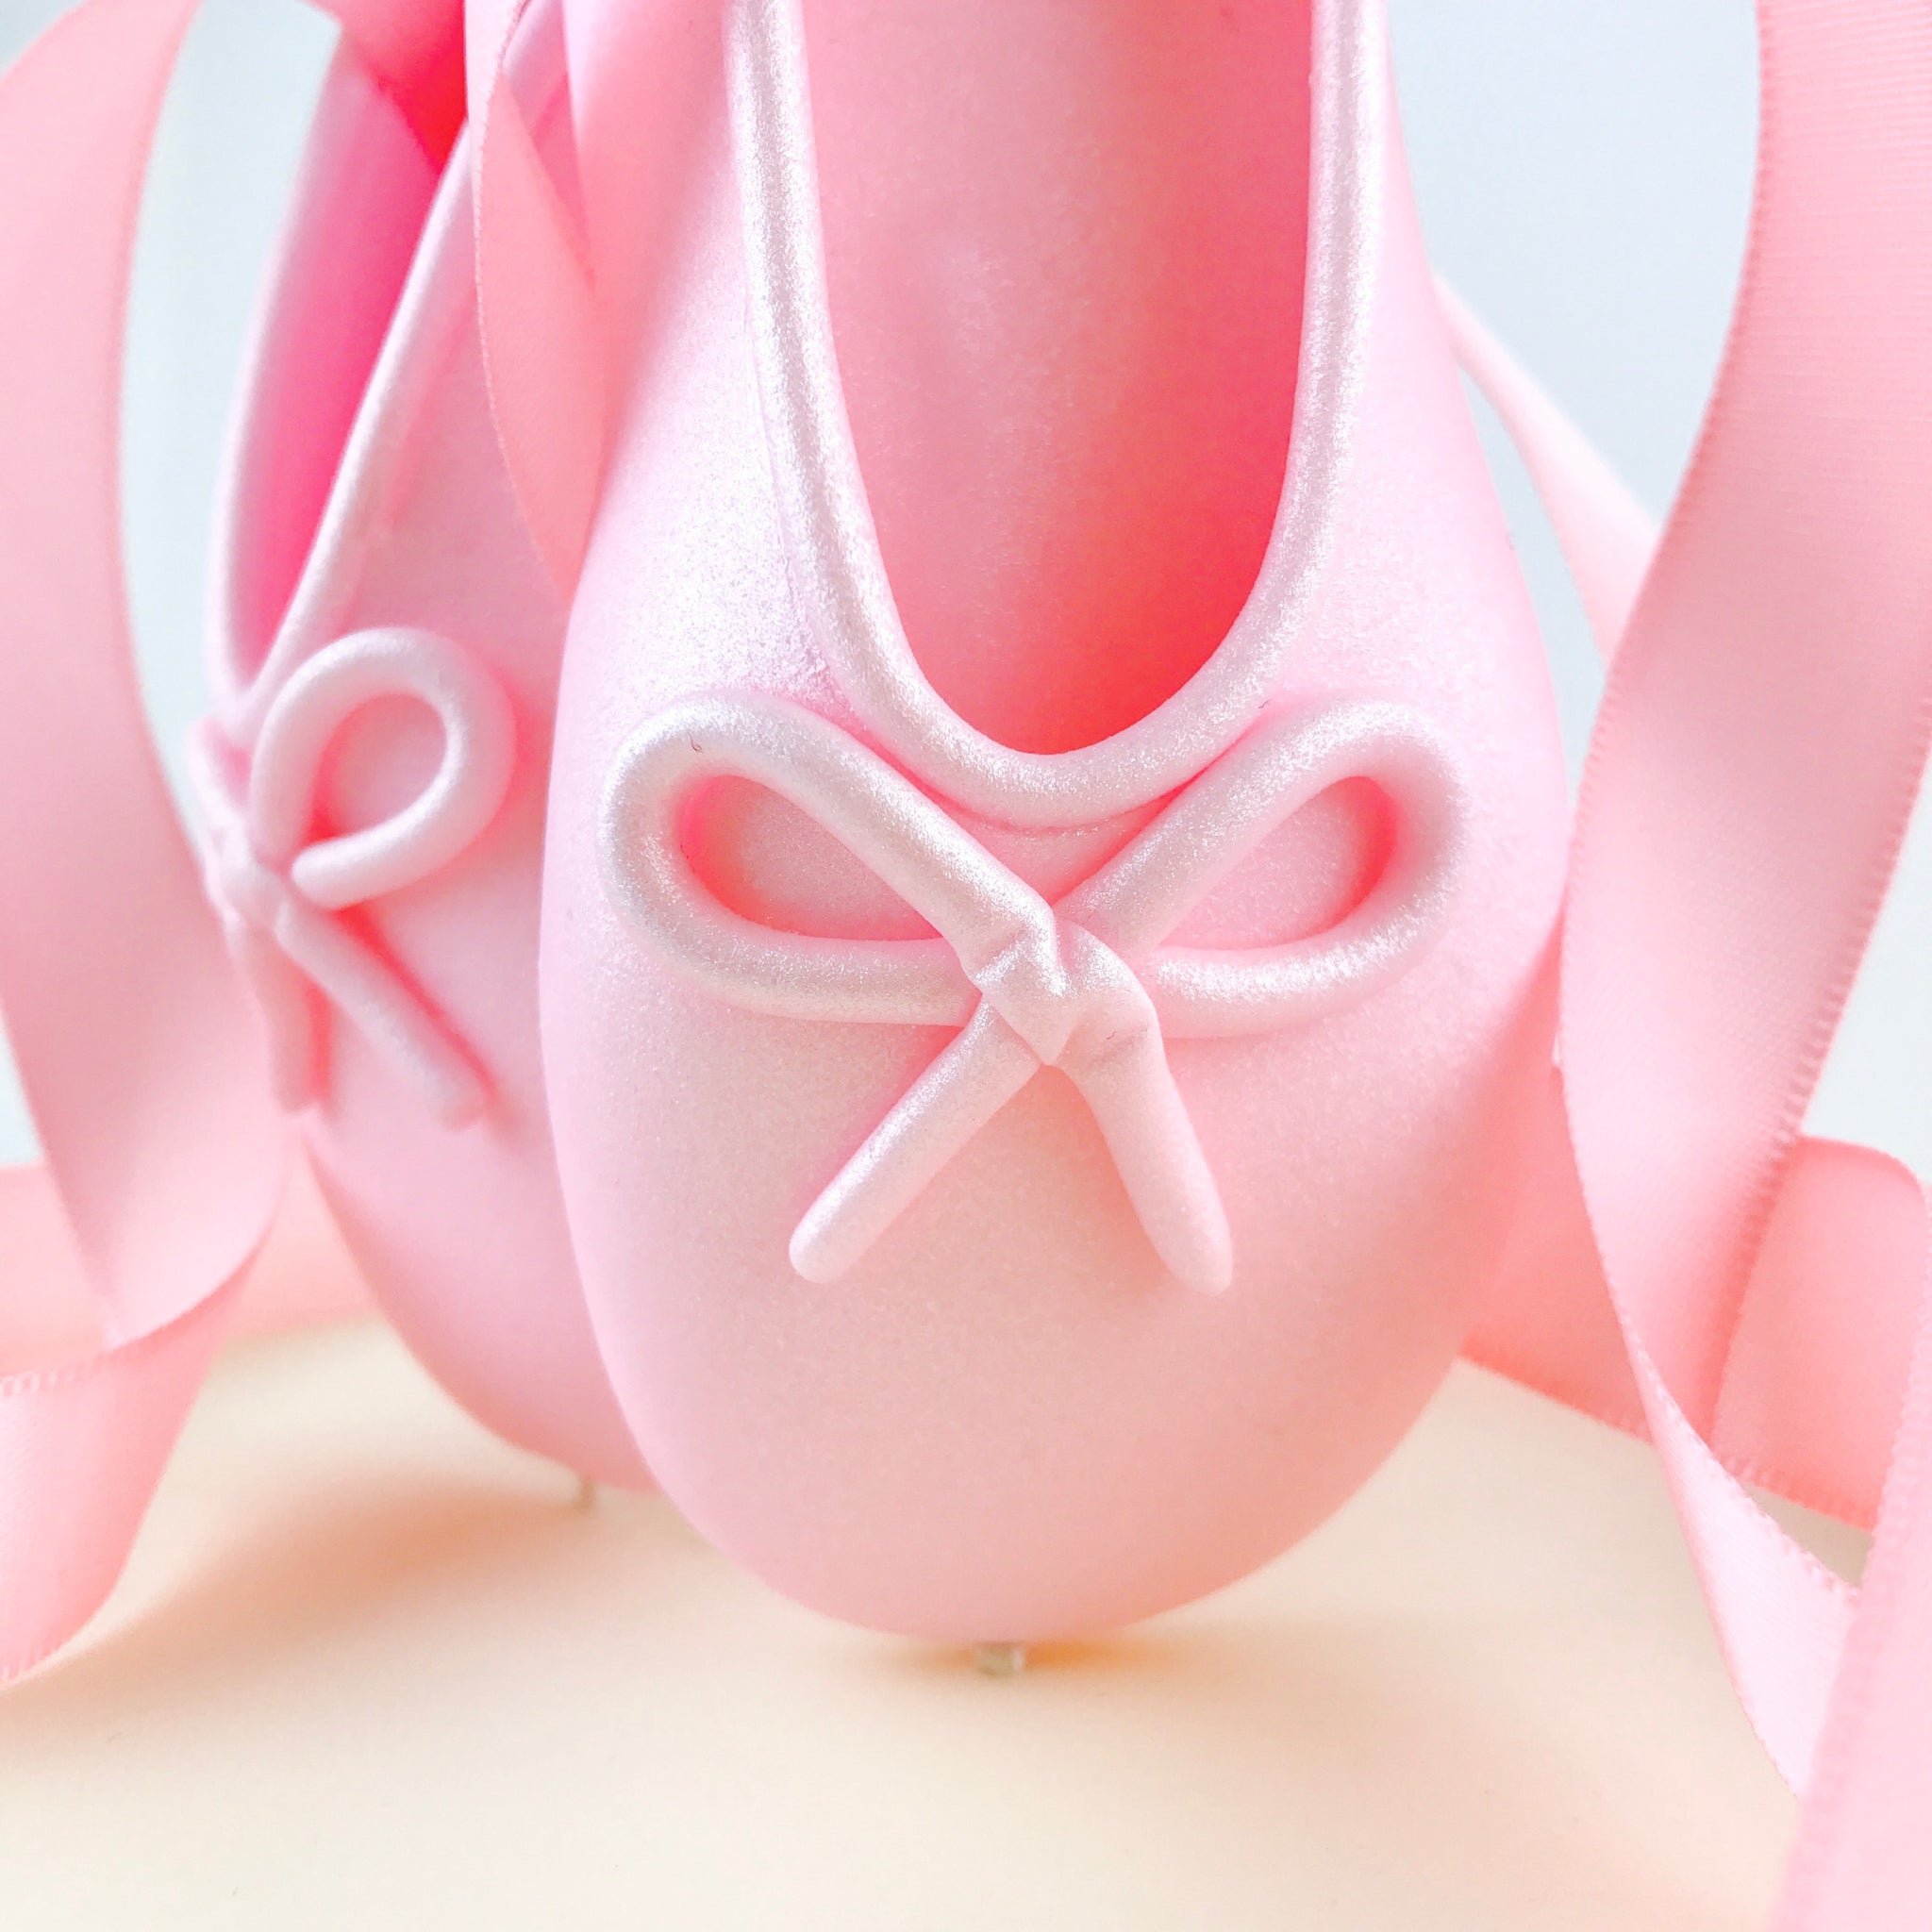 pink ballerina shoes